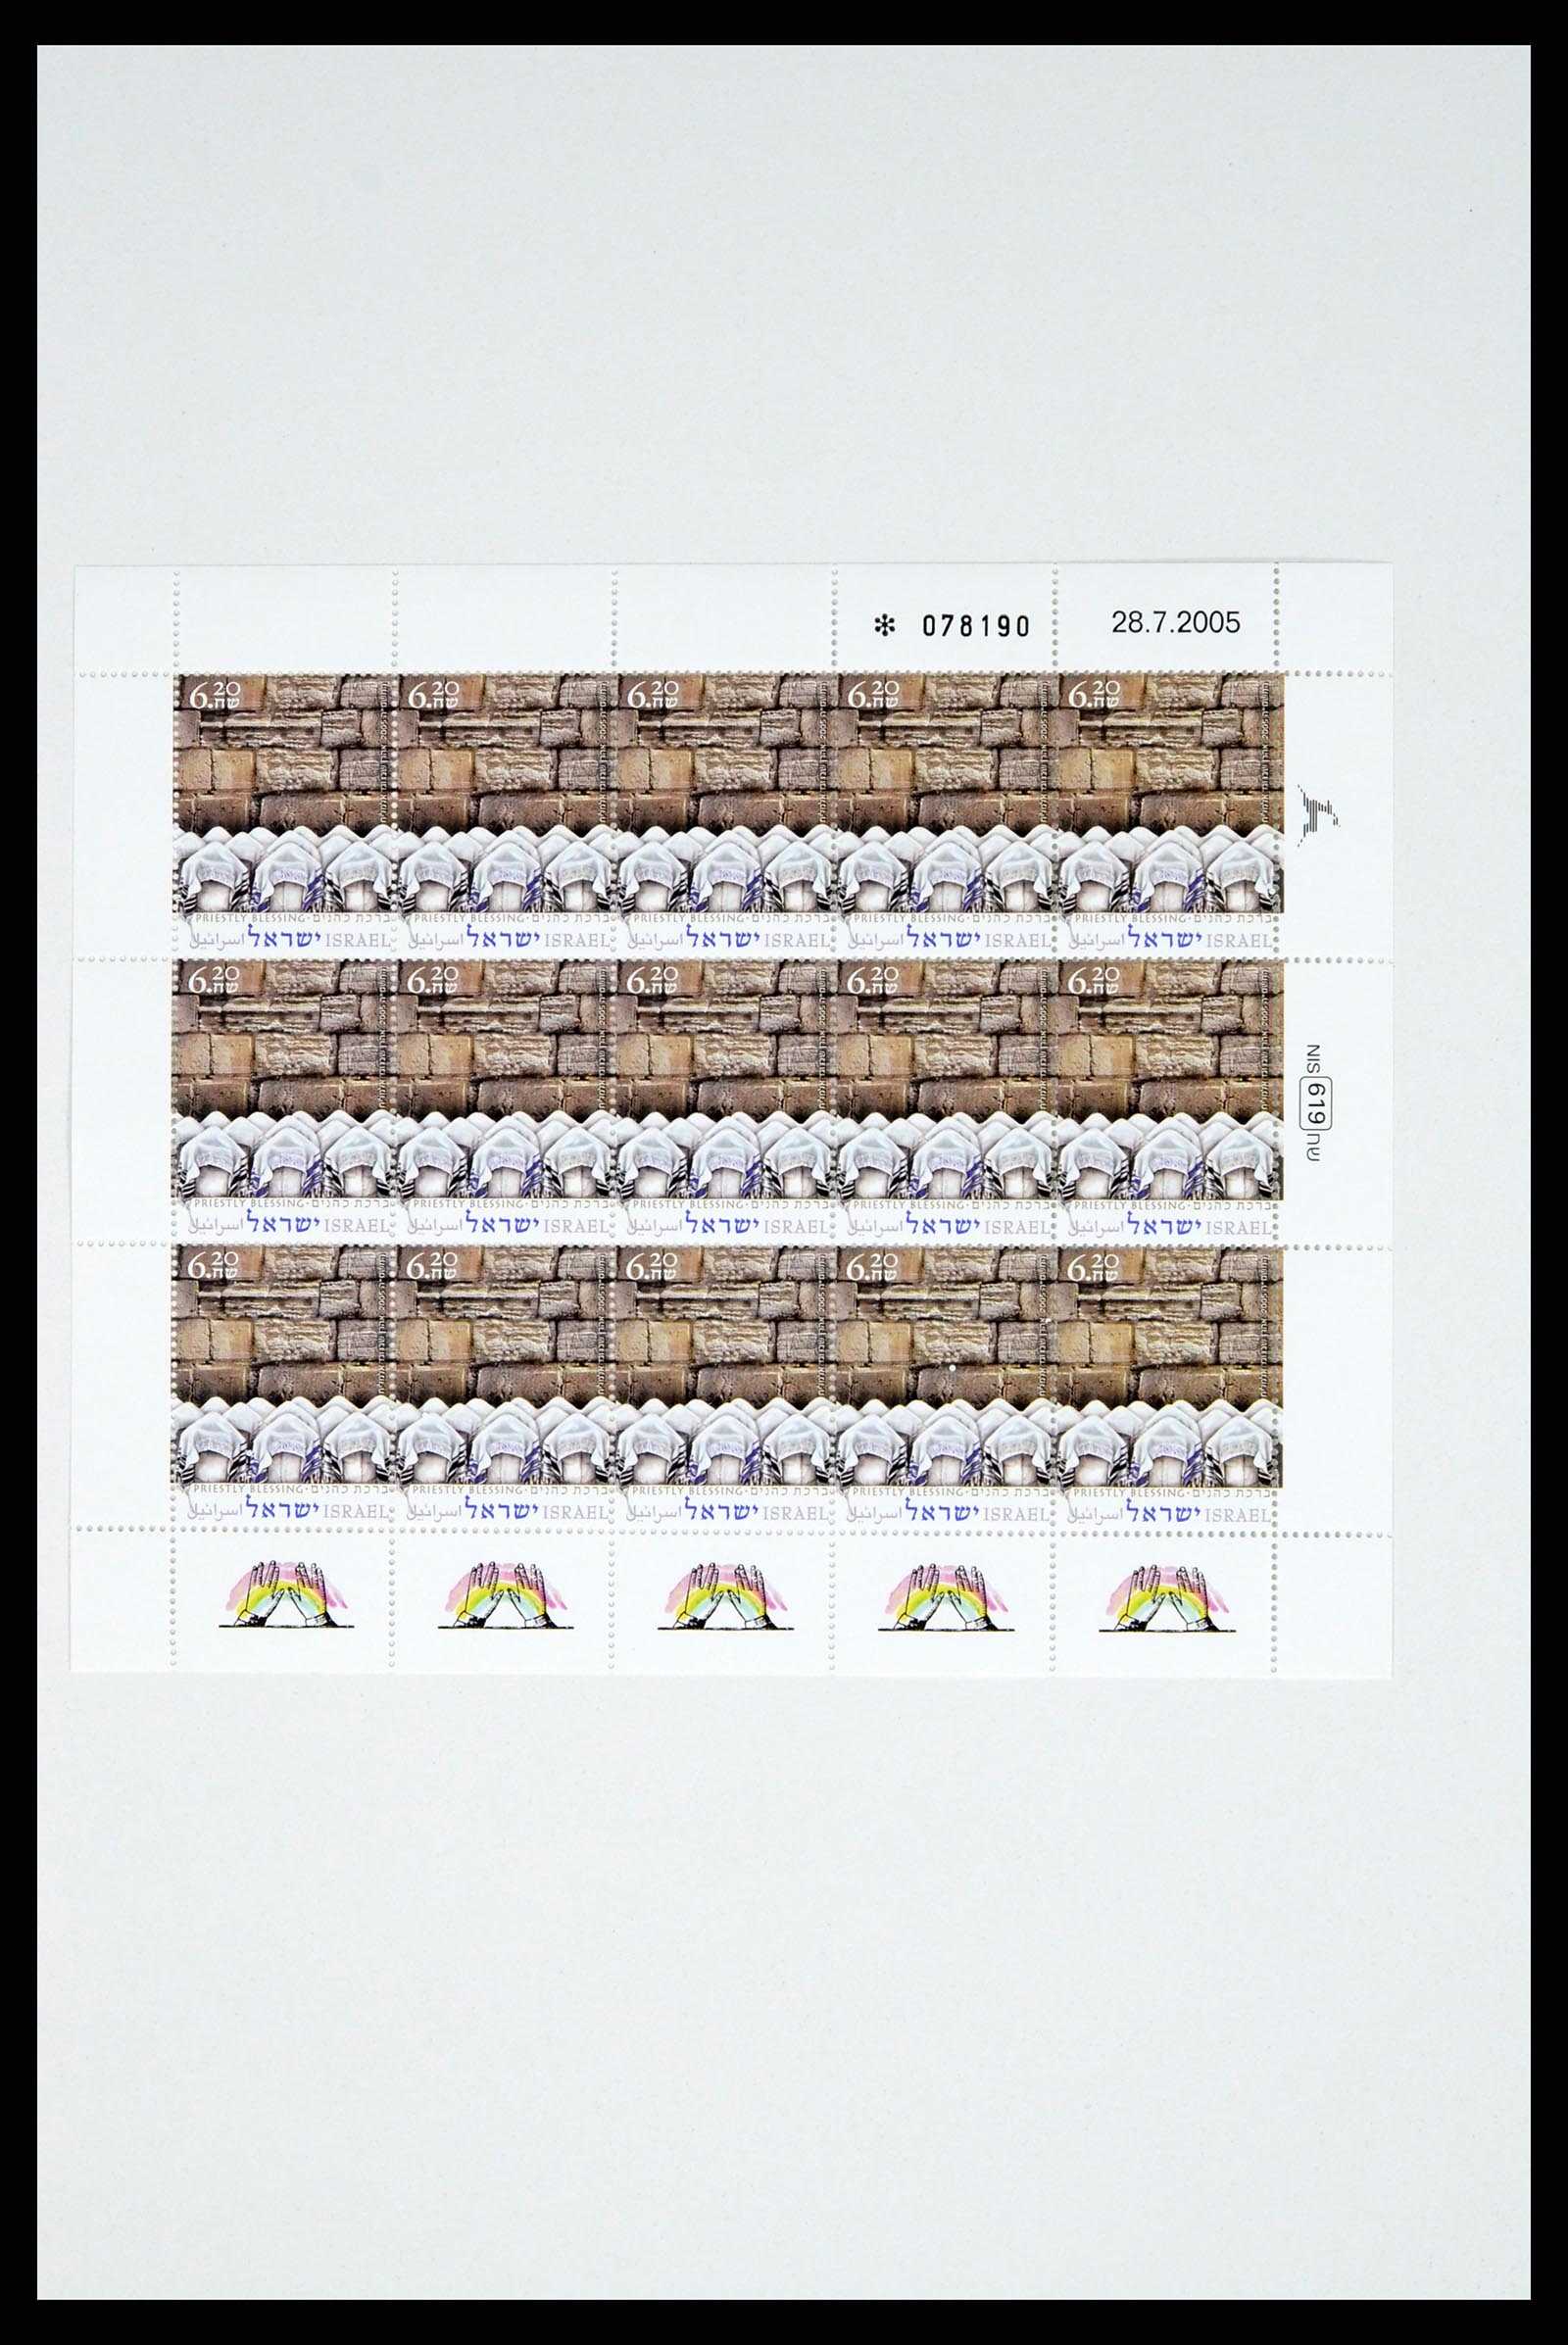 37779 369 - Stamp collection 37779 Israel sheetlets 1986-2009.